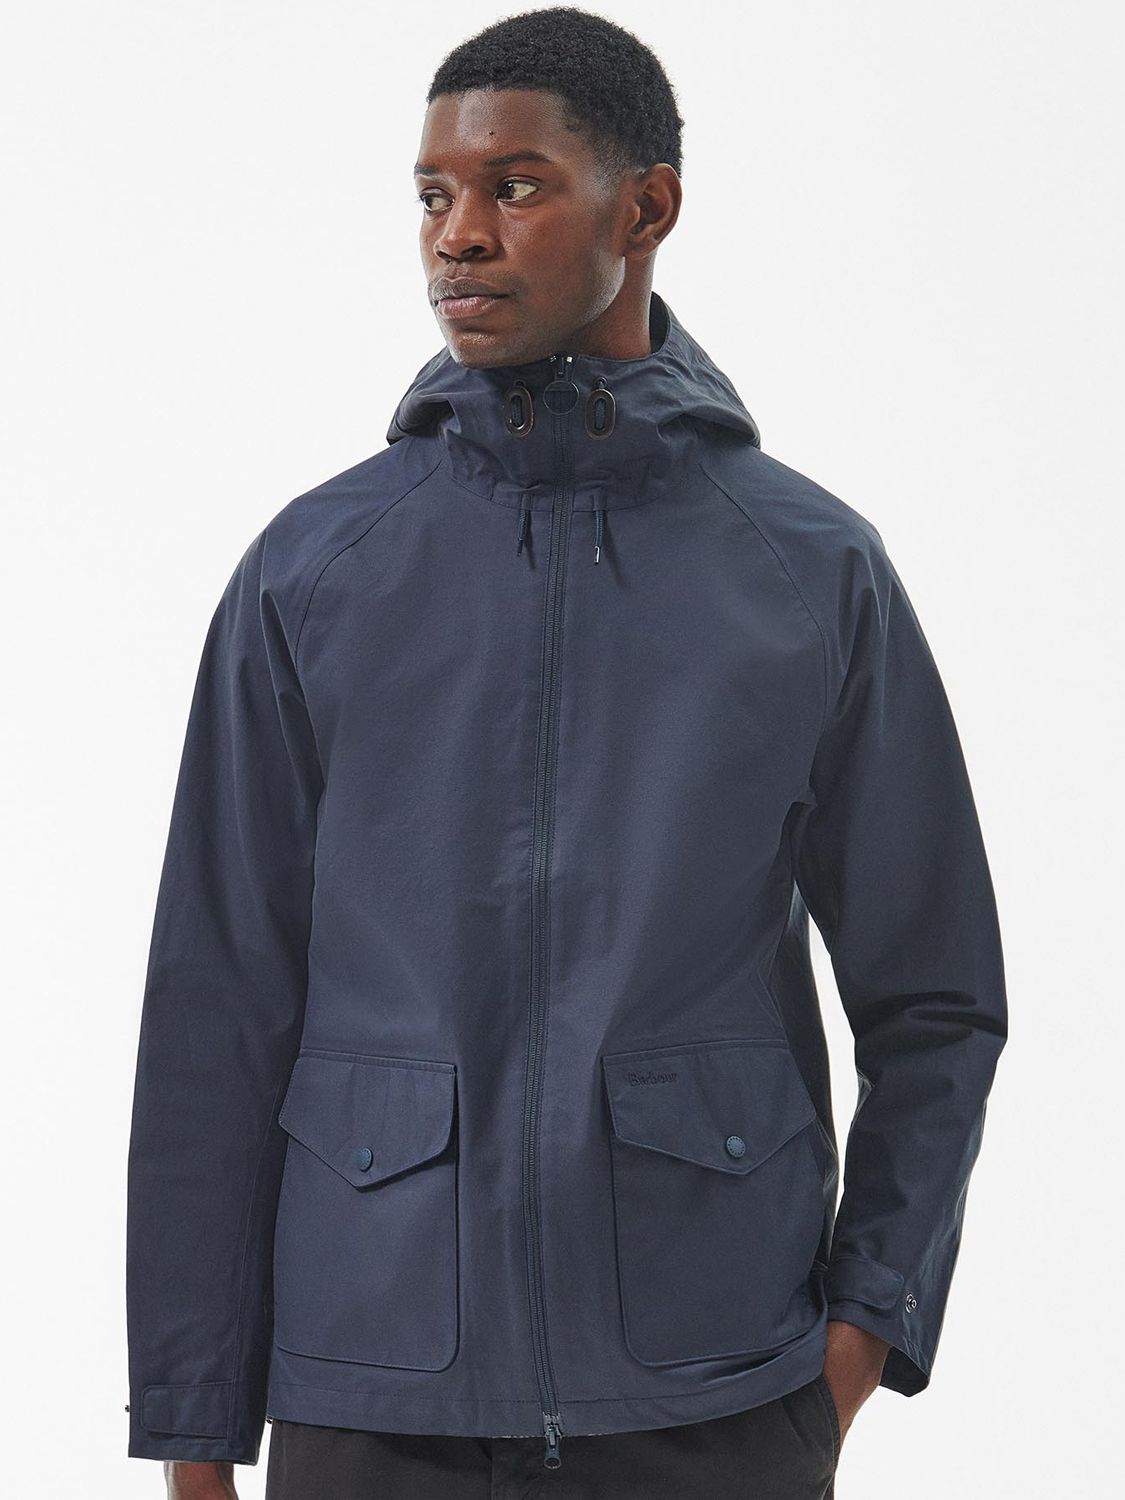 Barbour Whitstone Waterproof Jacket, Navy at John Lewis & Partners